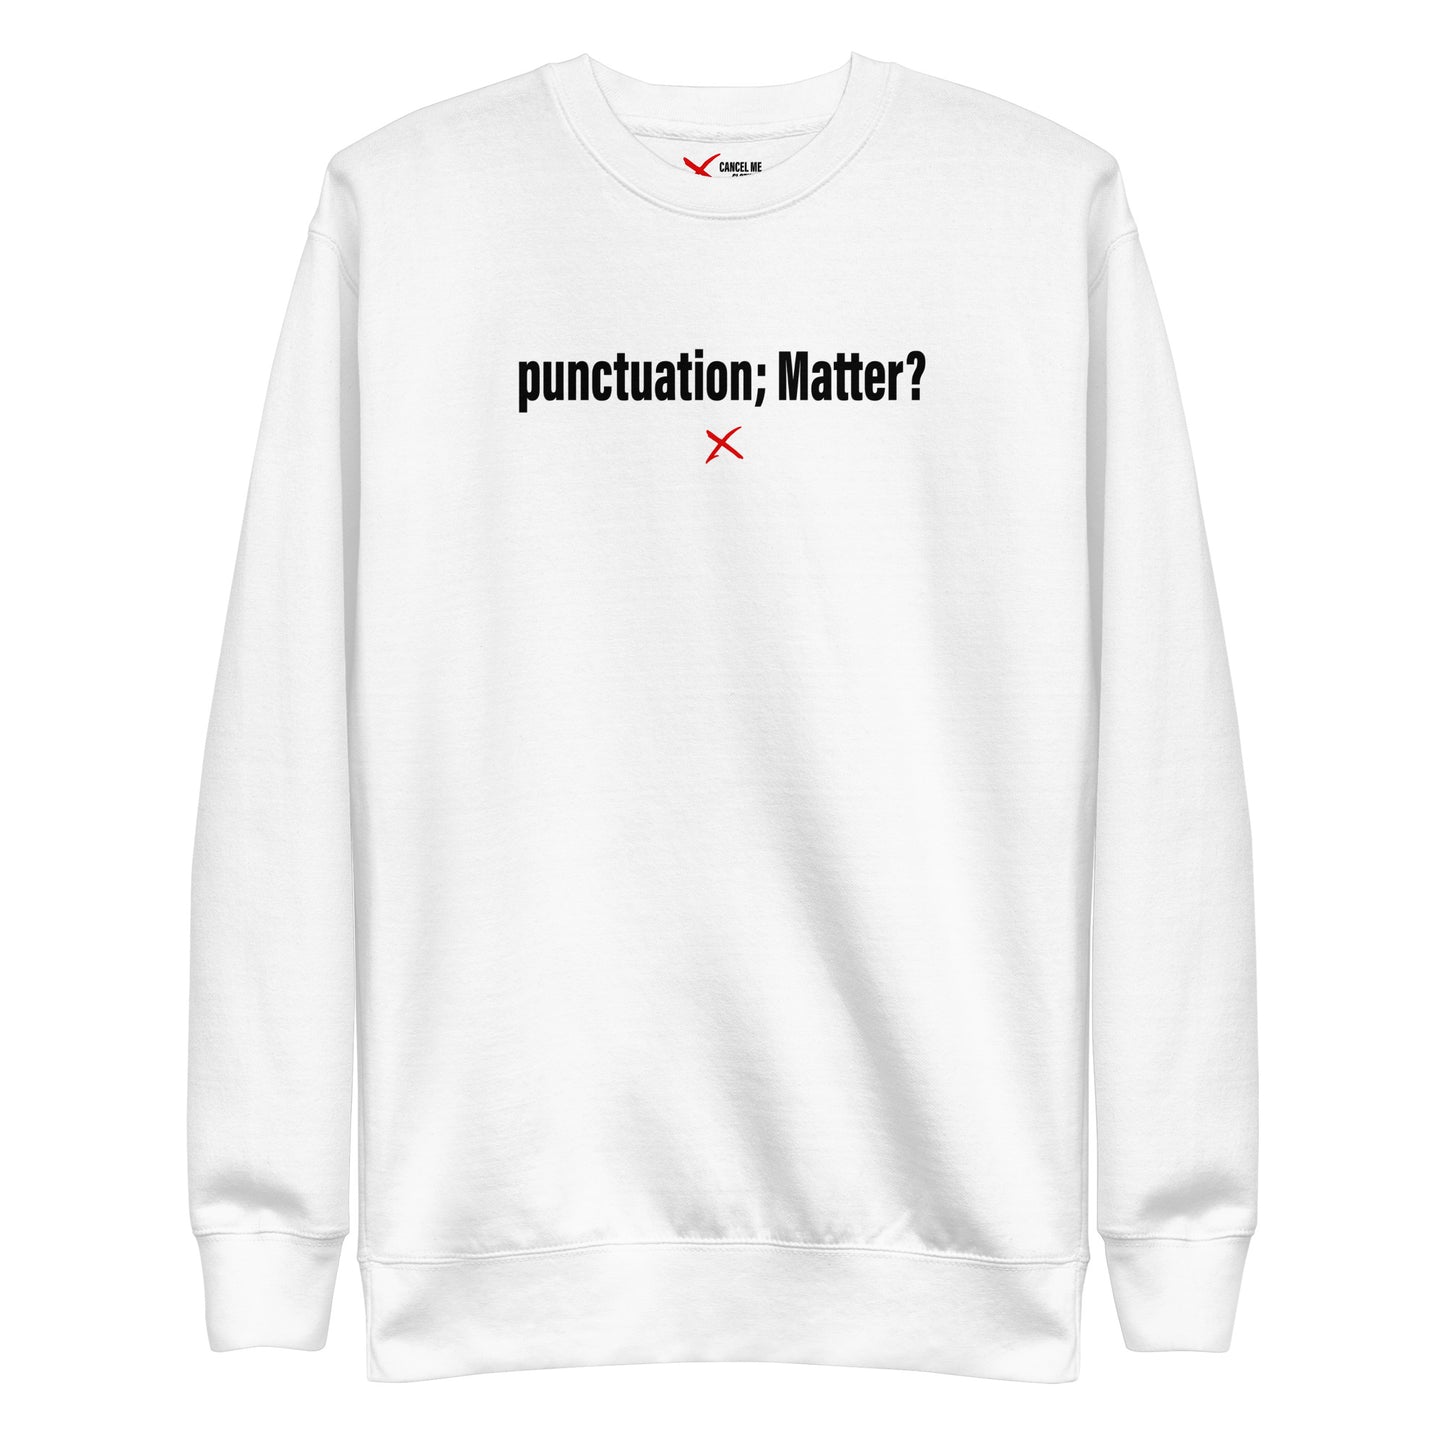 punctuation; Matter? - Sweatshirt